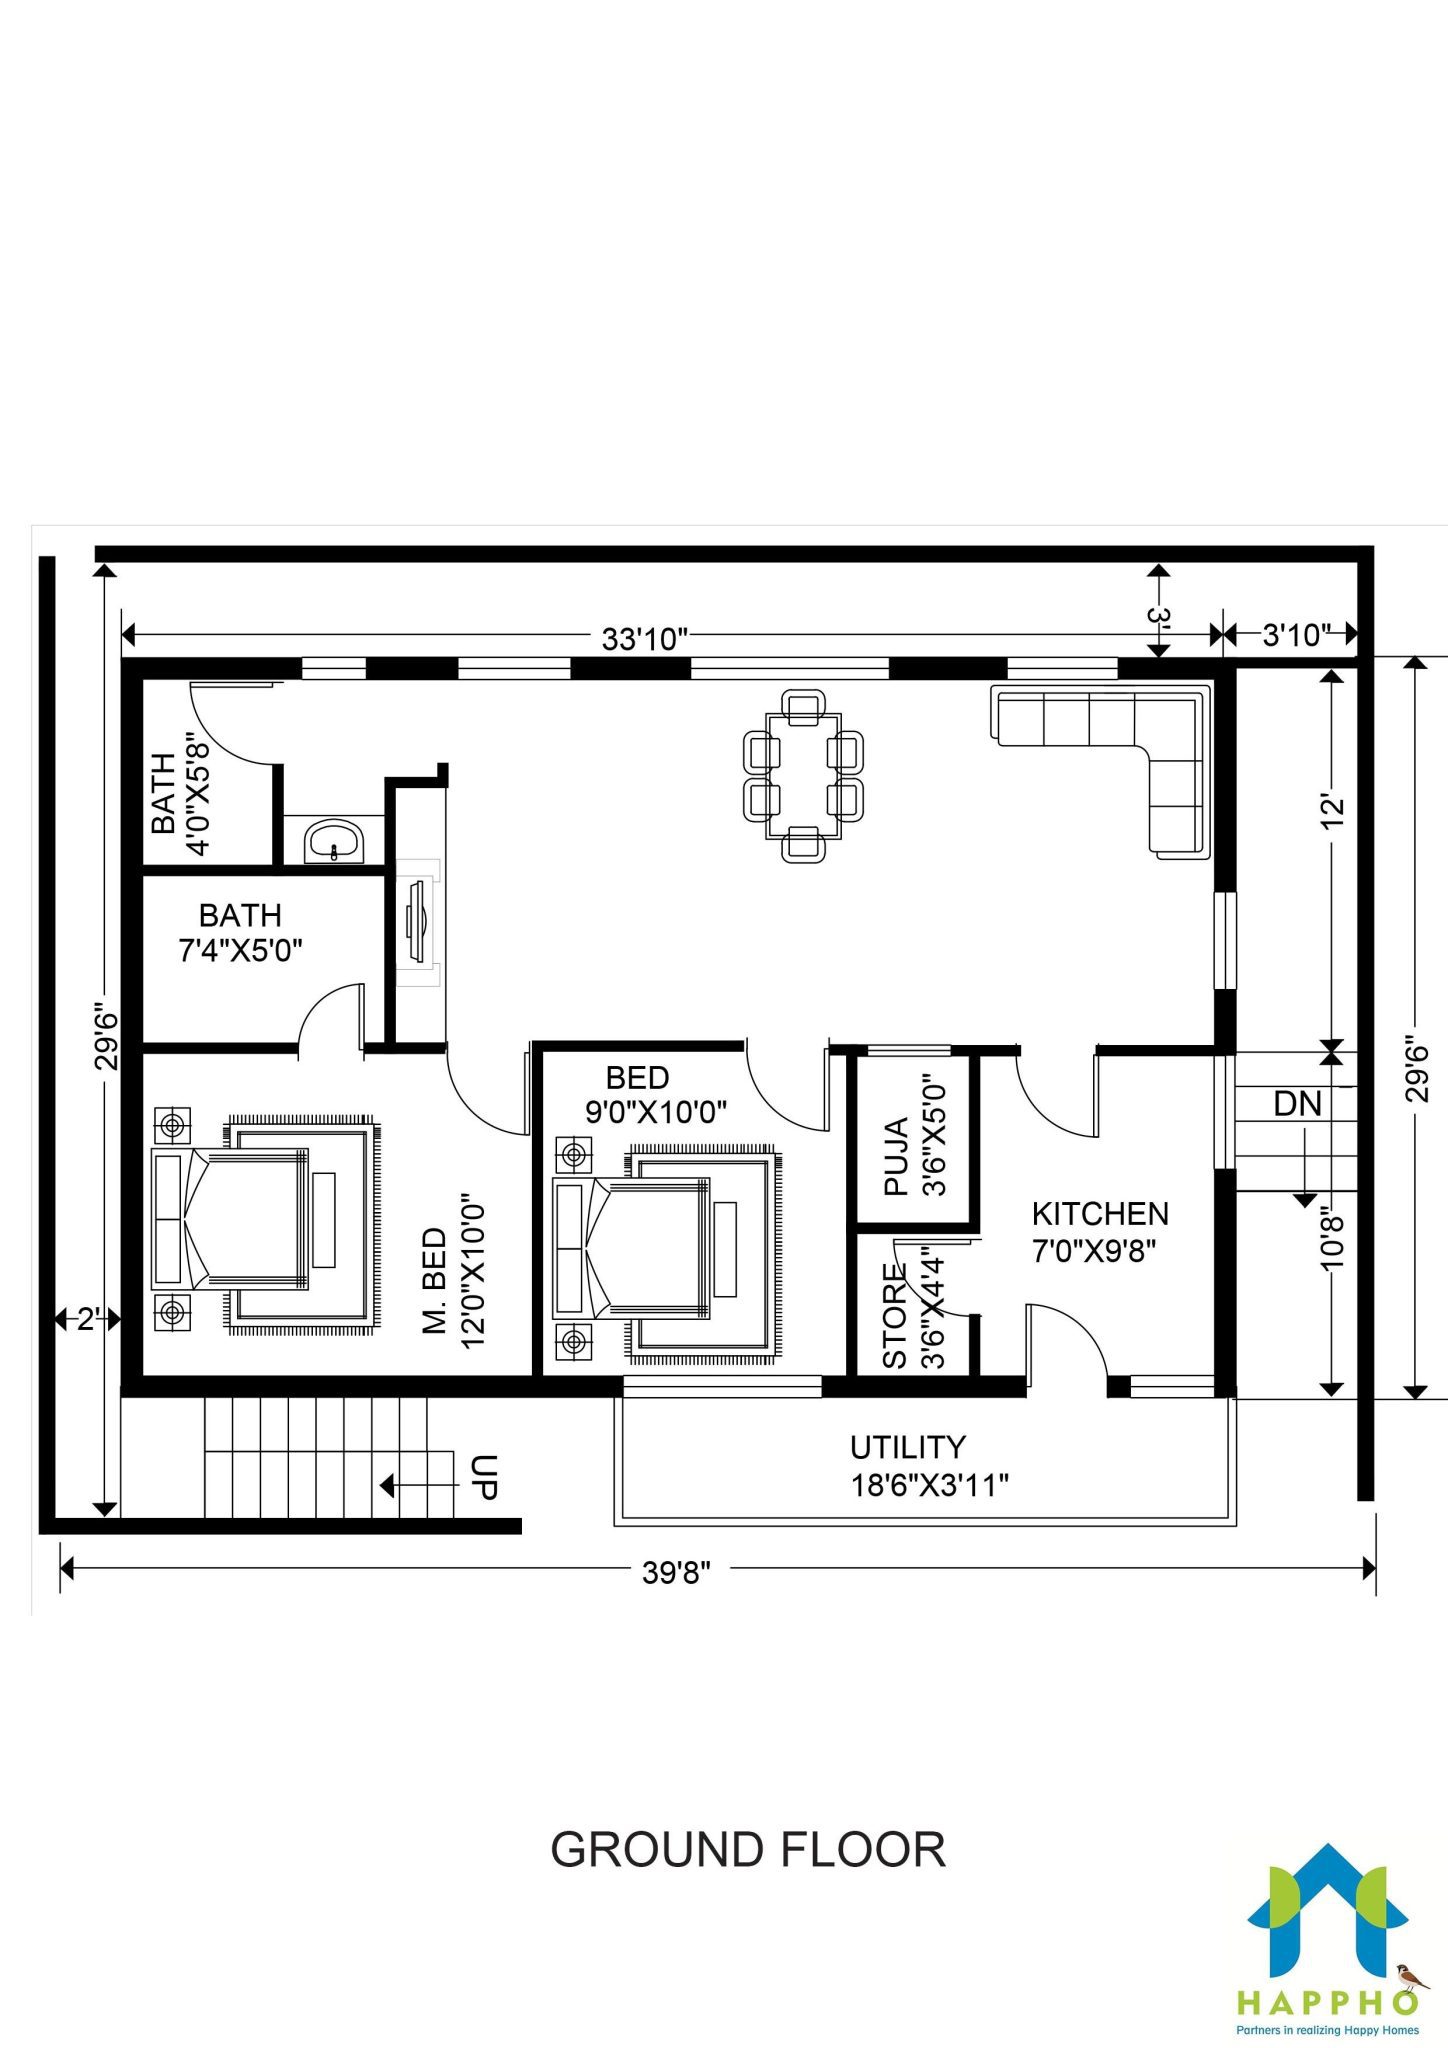 2Bhk floor plan 30 X 40 Plot area (1200 square feet)